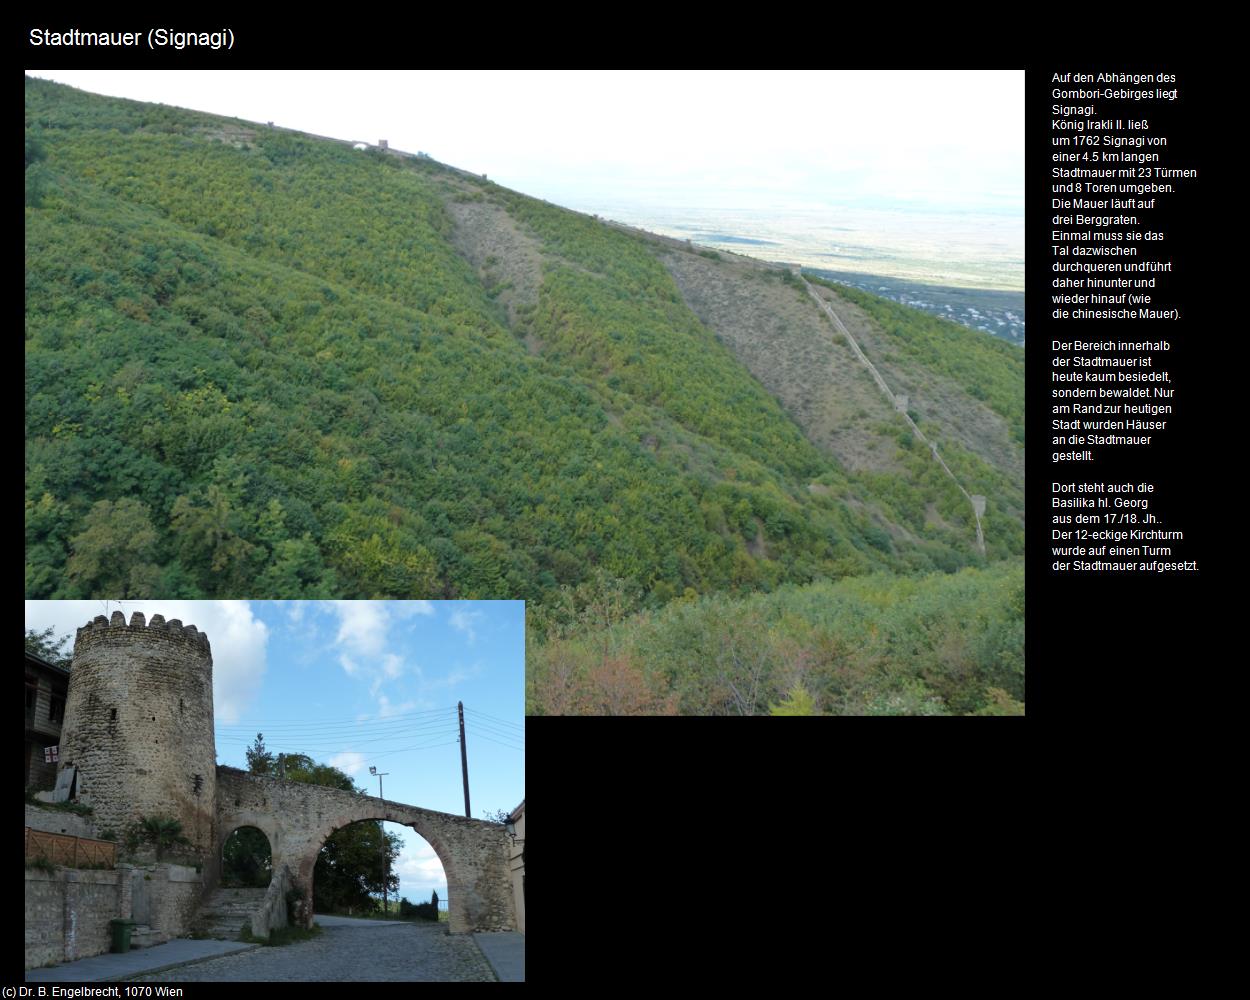 Stadtmauer (Signagi) in GEORGIEN